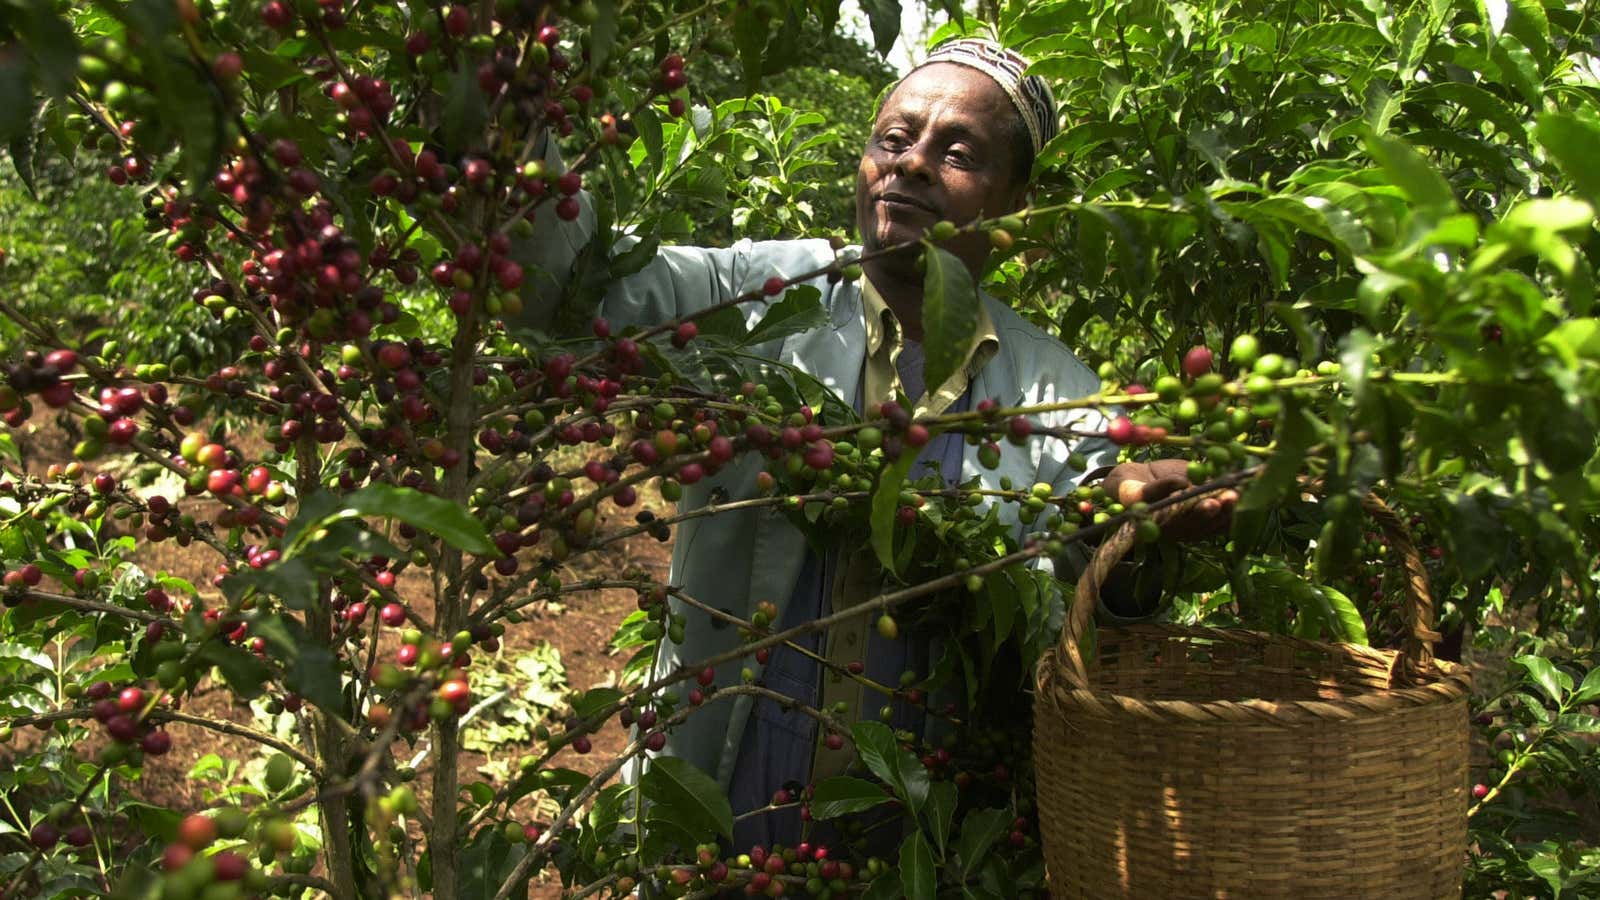 As many as 15 million Ethiopian farmers depend on coffee farming.